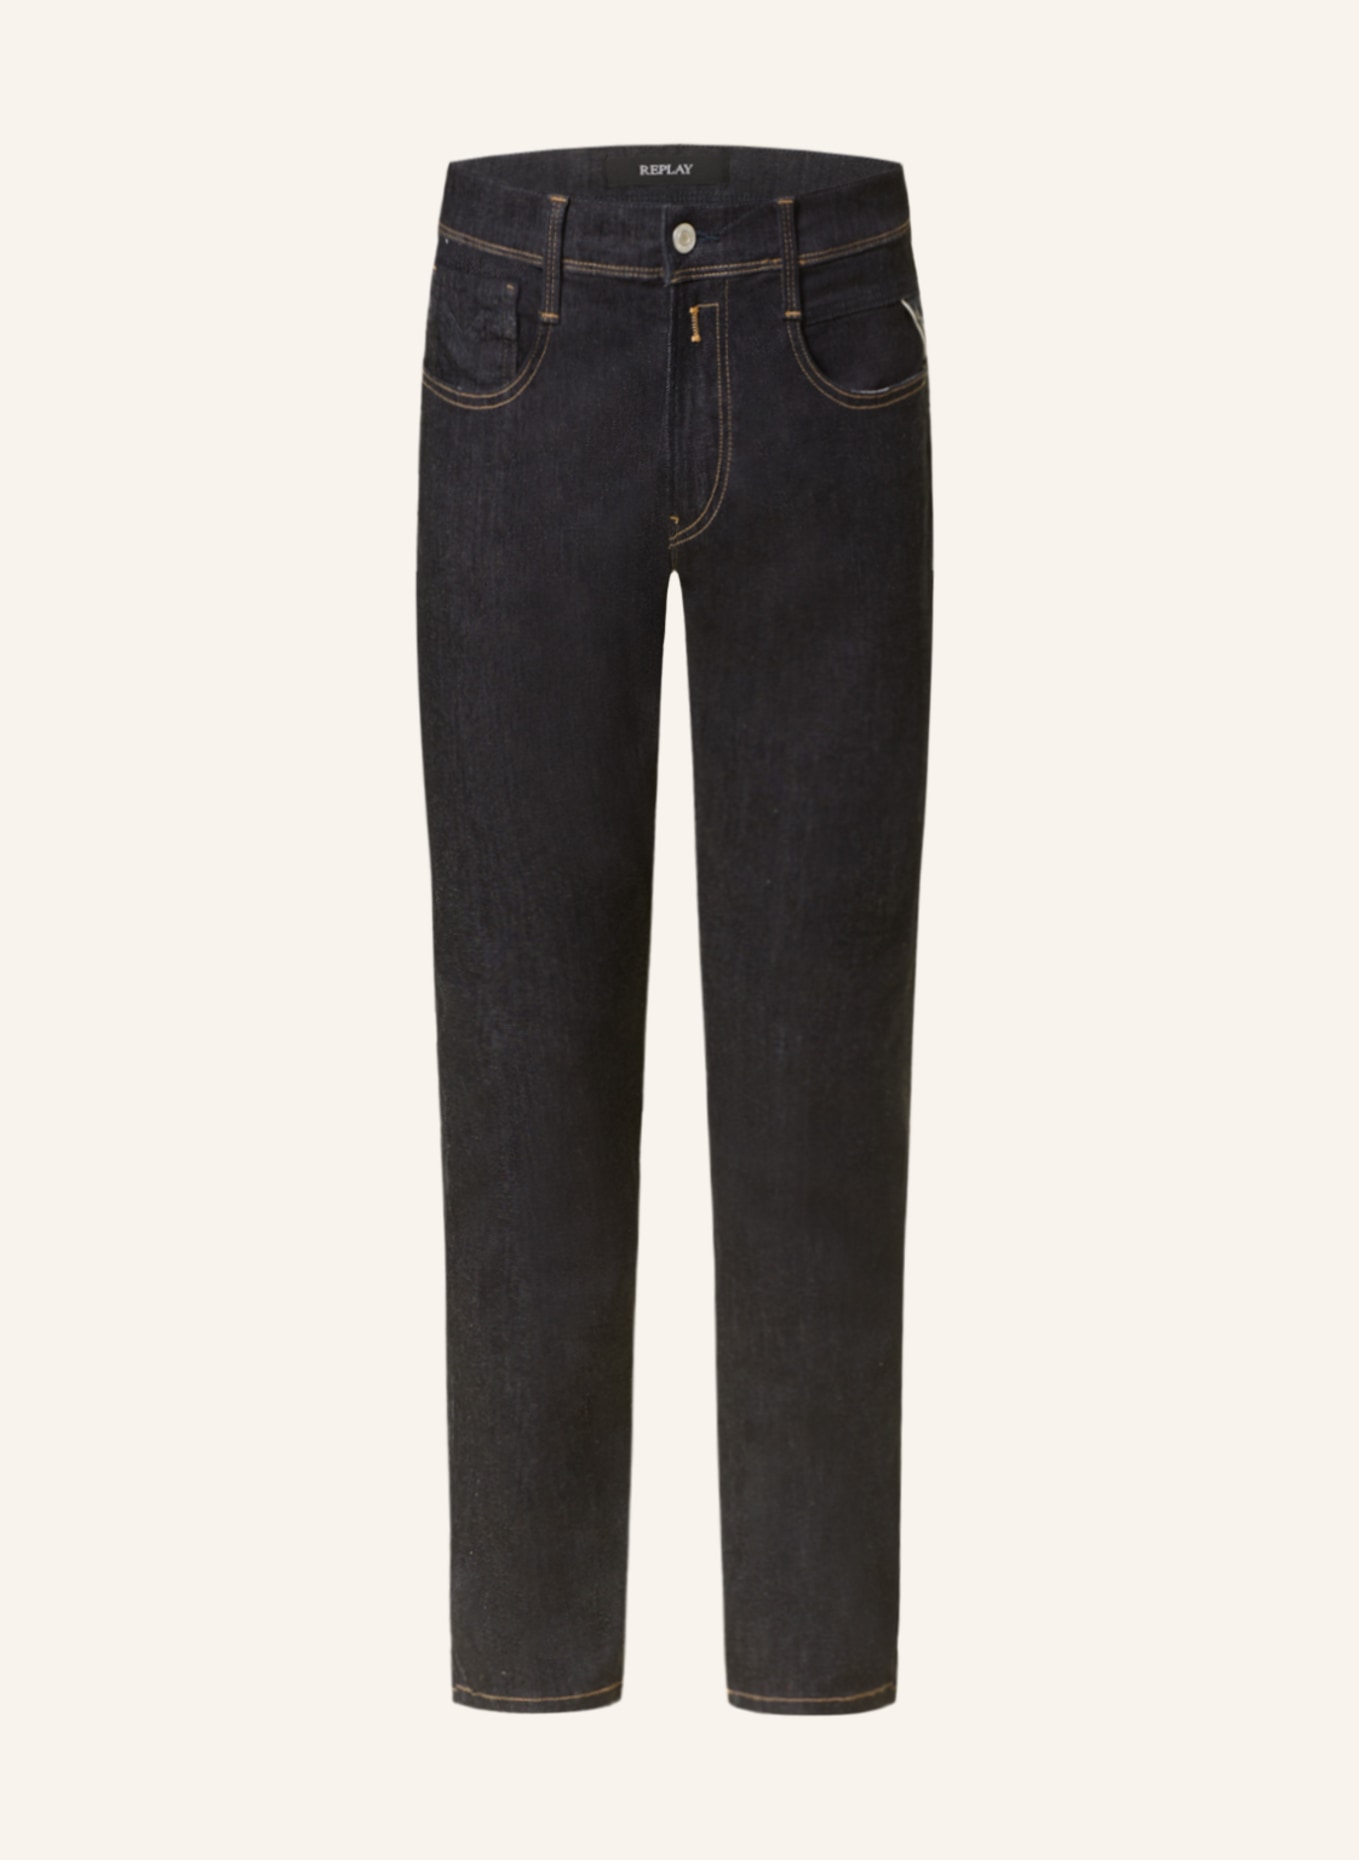 REPLAY Jeans HYPERFLEX ANBASS Slim Fit, Farbe: 007 DARK BLUE (Bild 1)